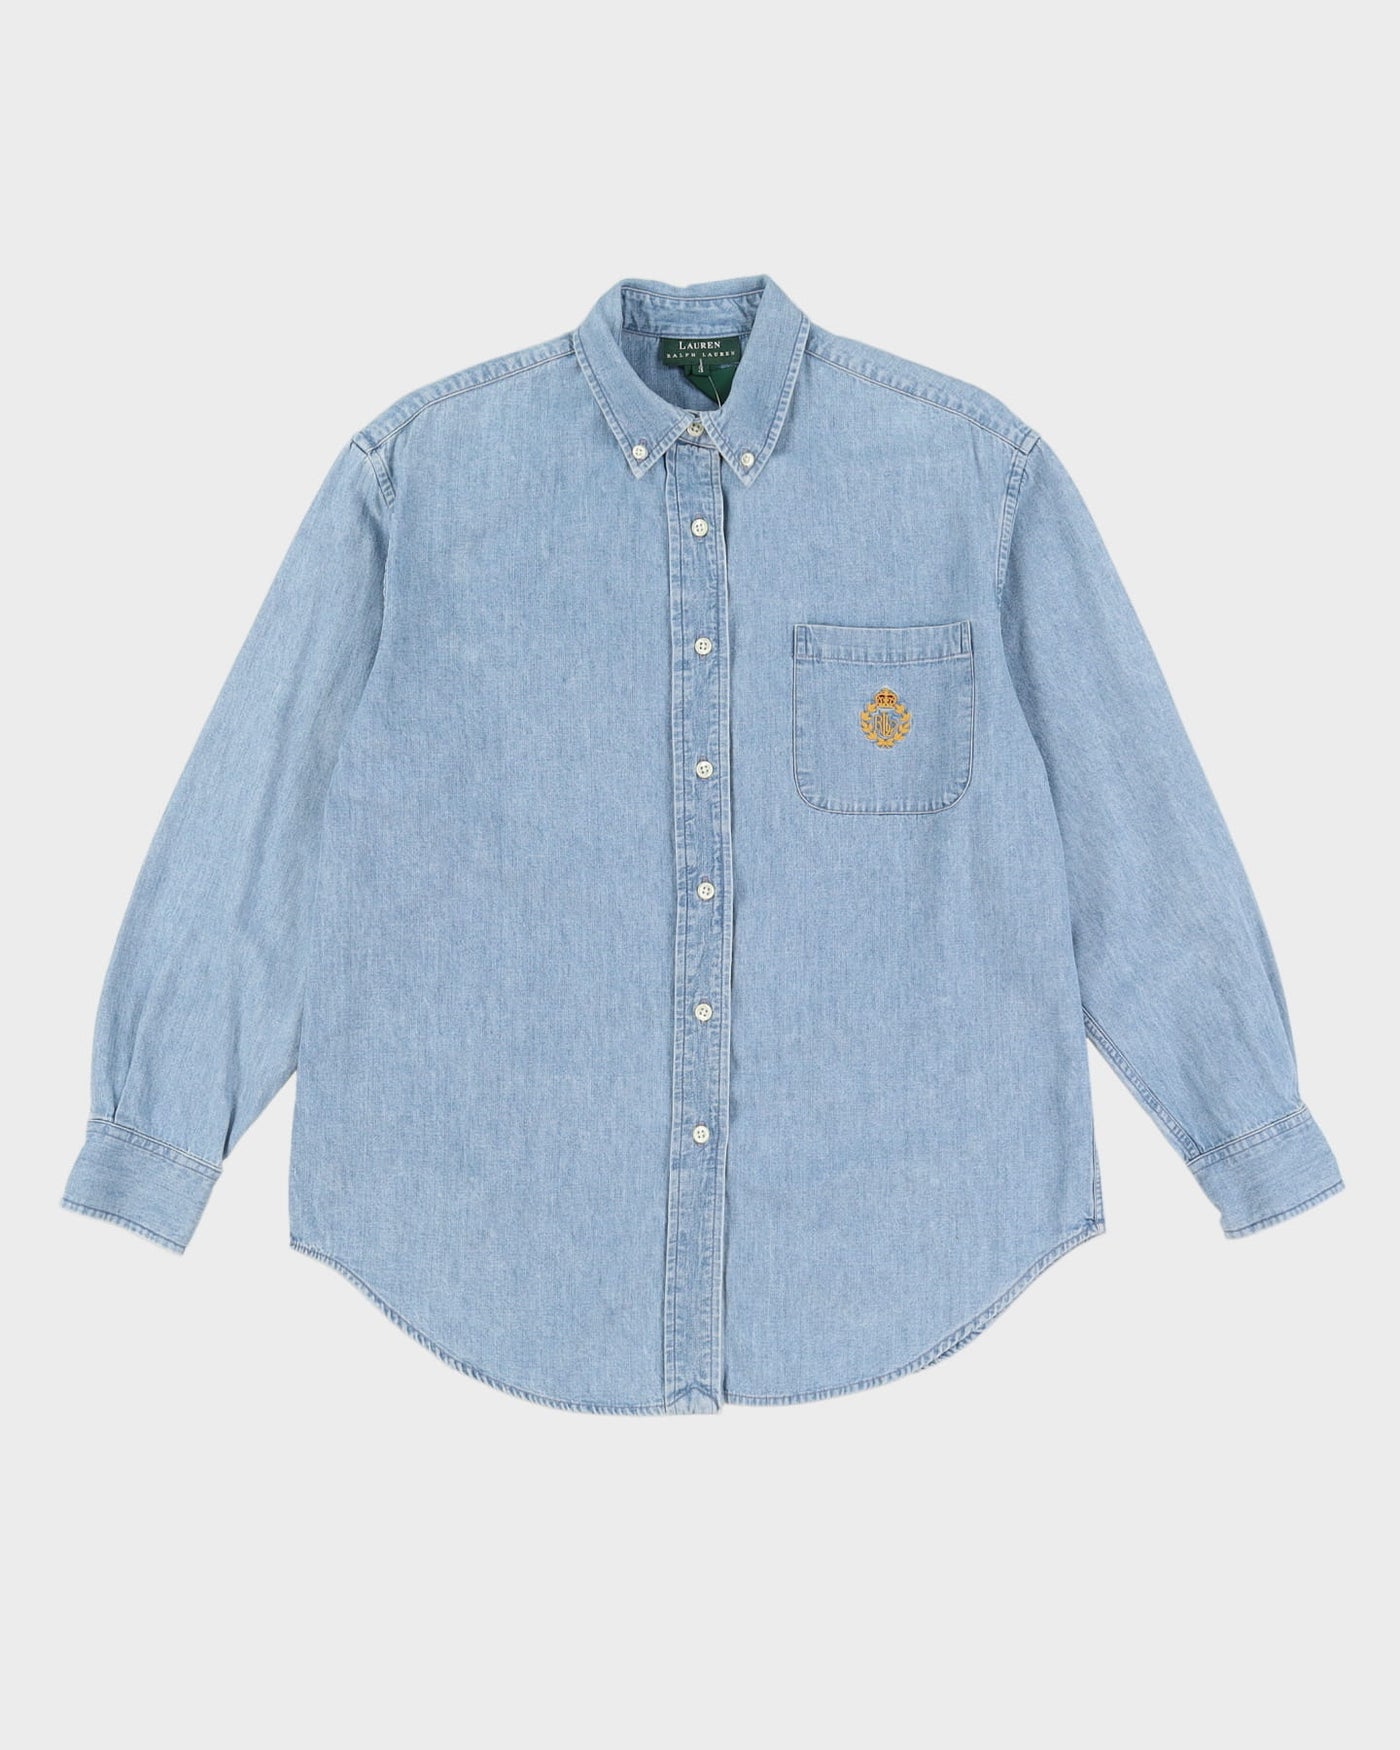 Vintage Ralph Lauren Denim Shirt - S / M